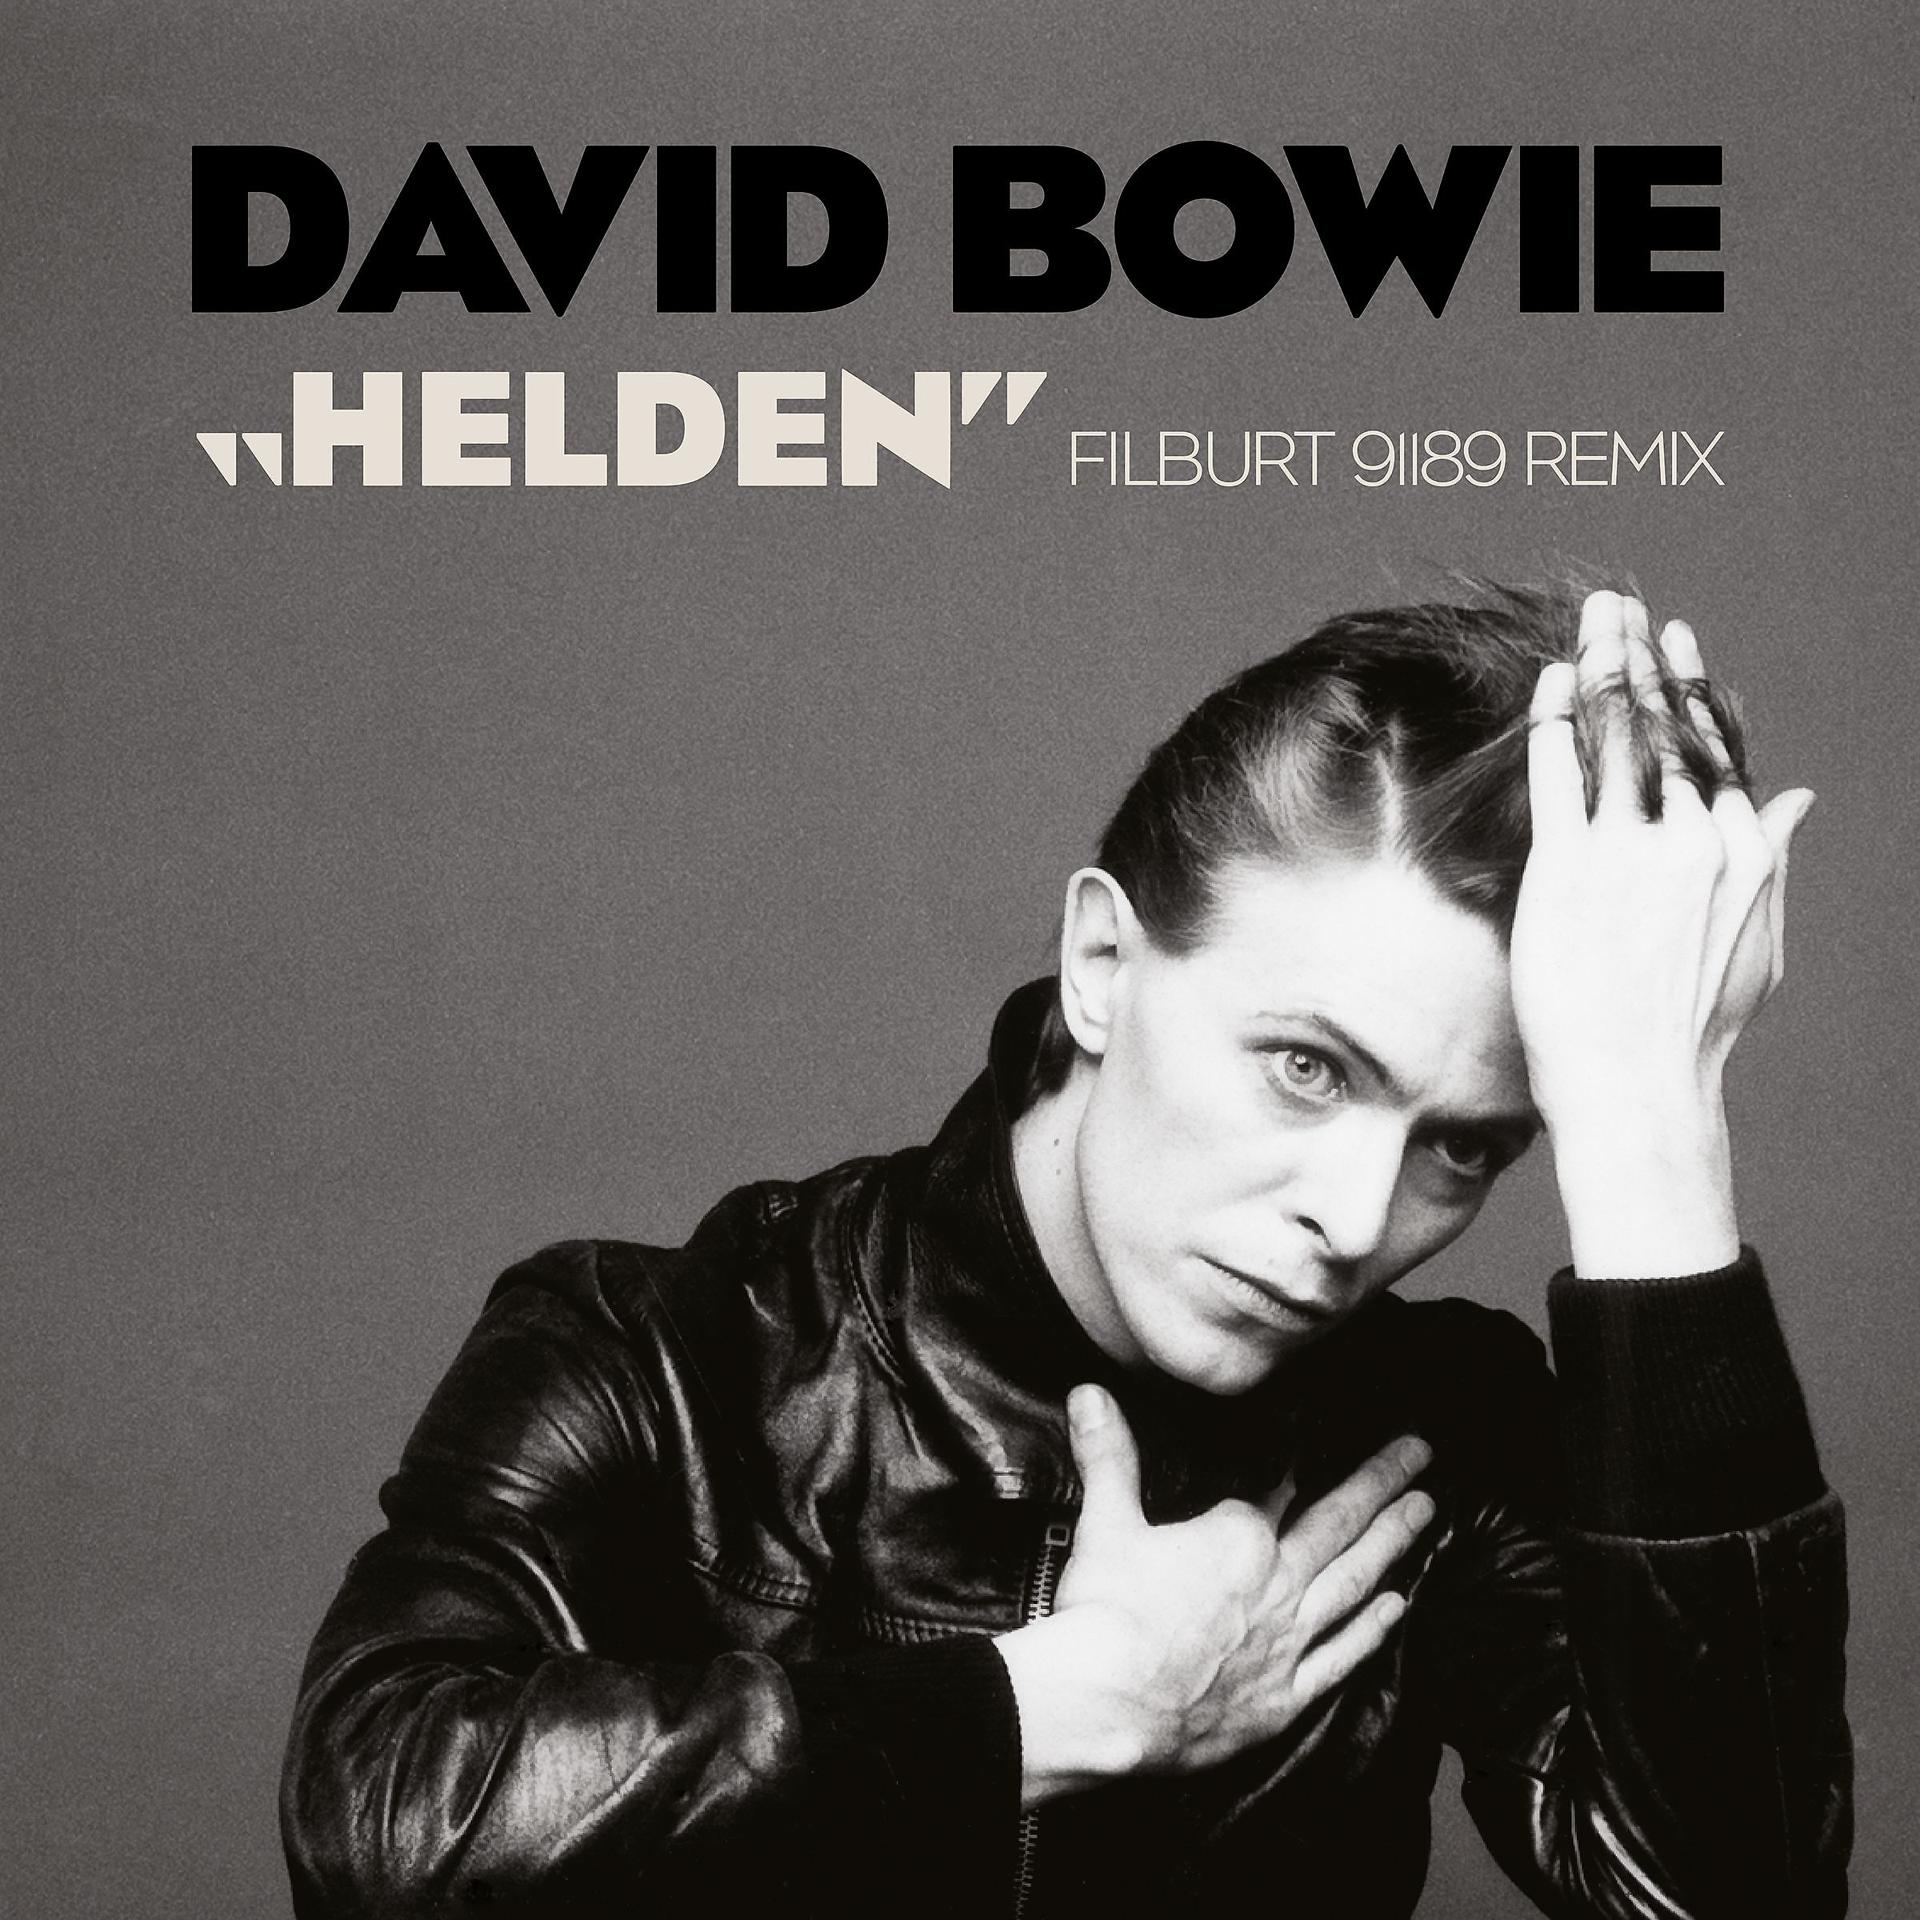 Постер альбома "Helden" (Filburt 91189 Remix)